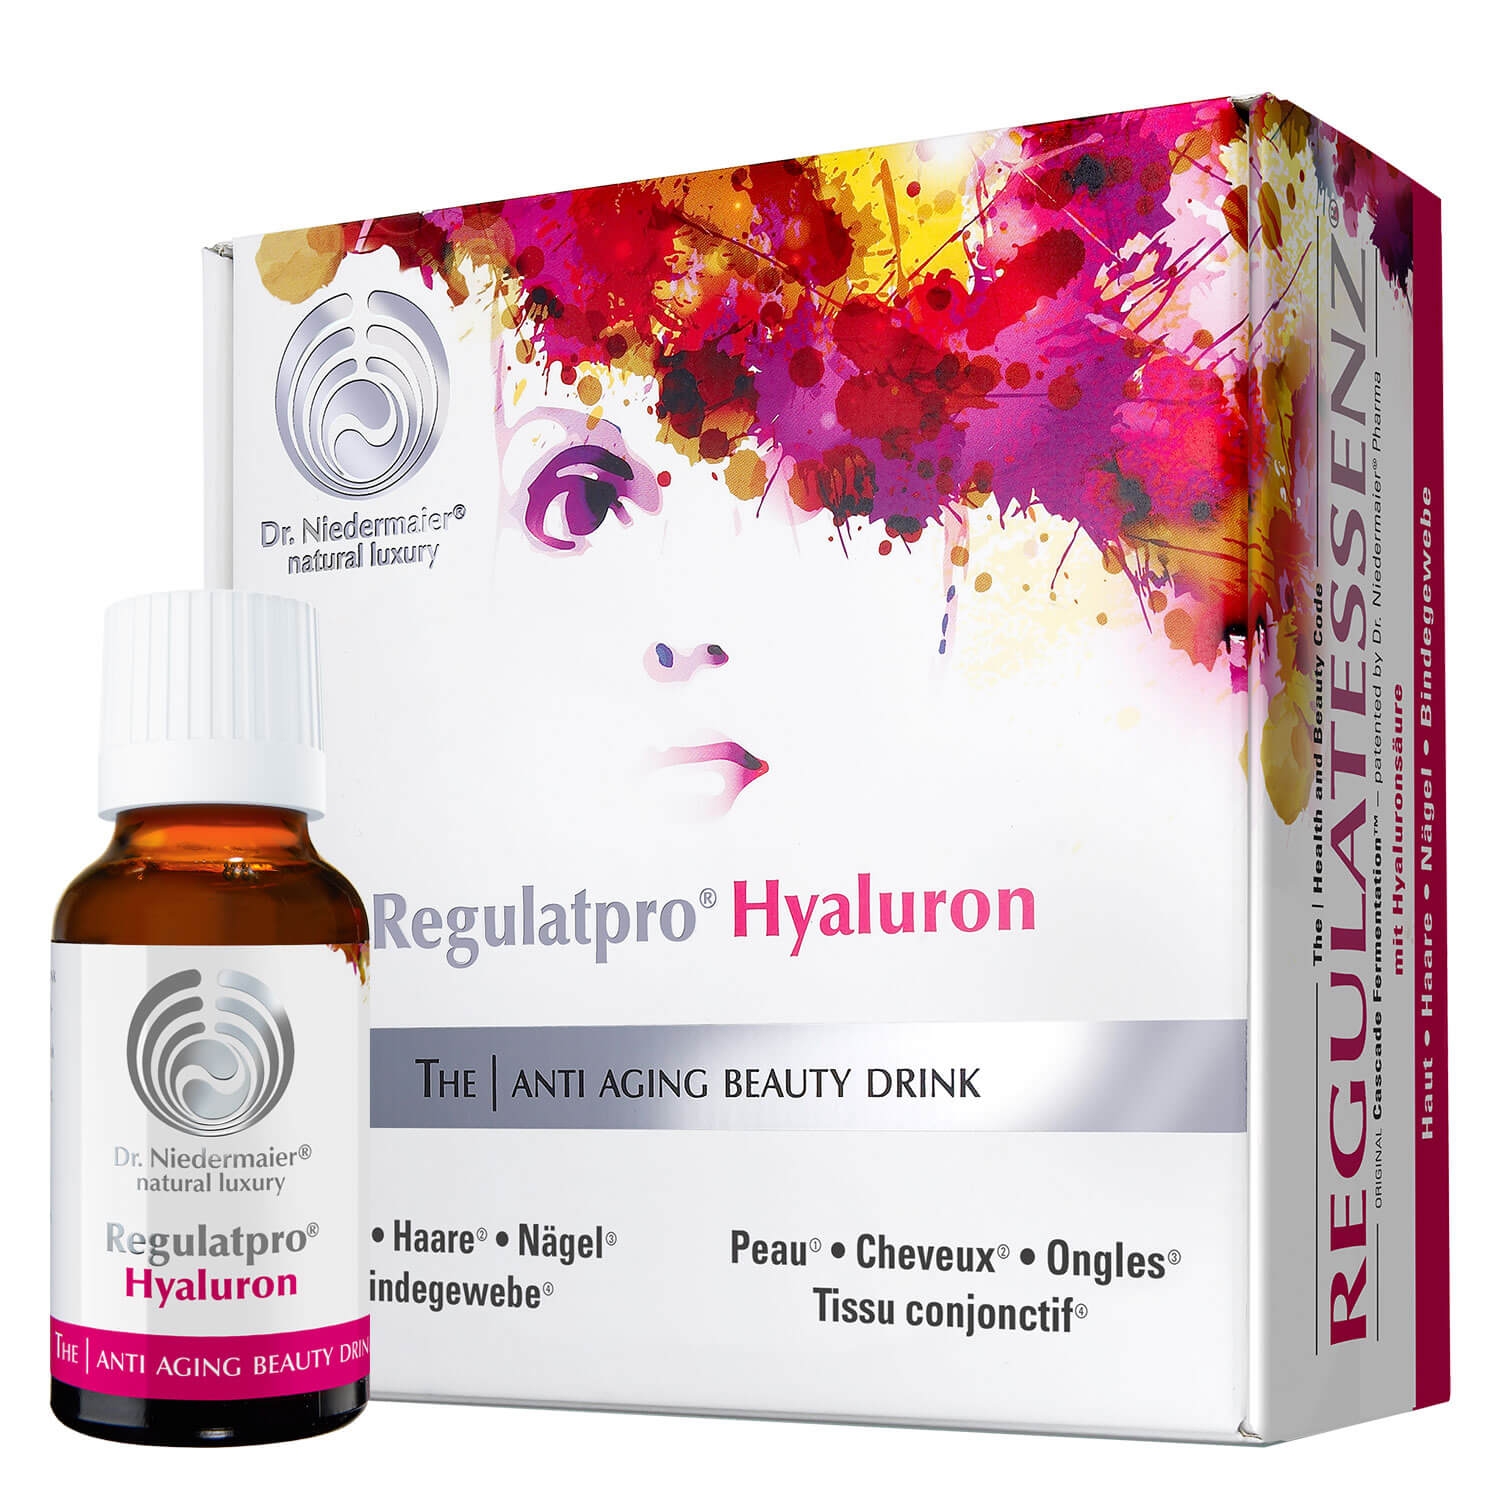 Product image from Regulatpro® - Hyaluron